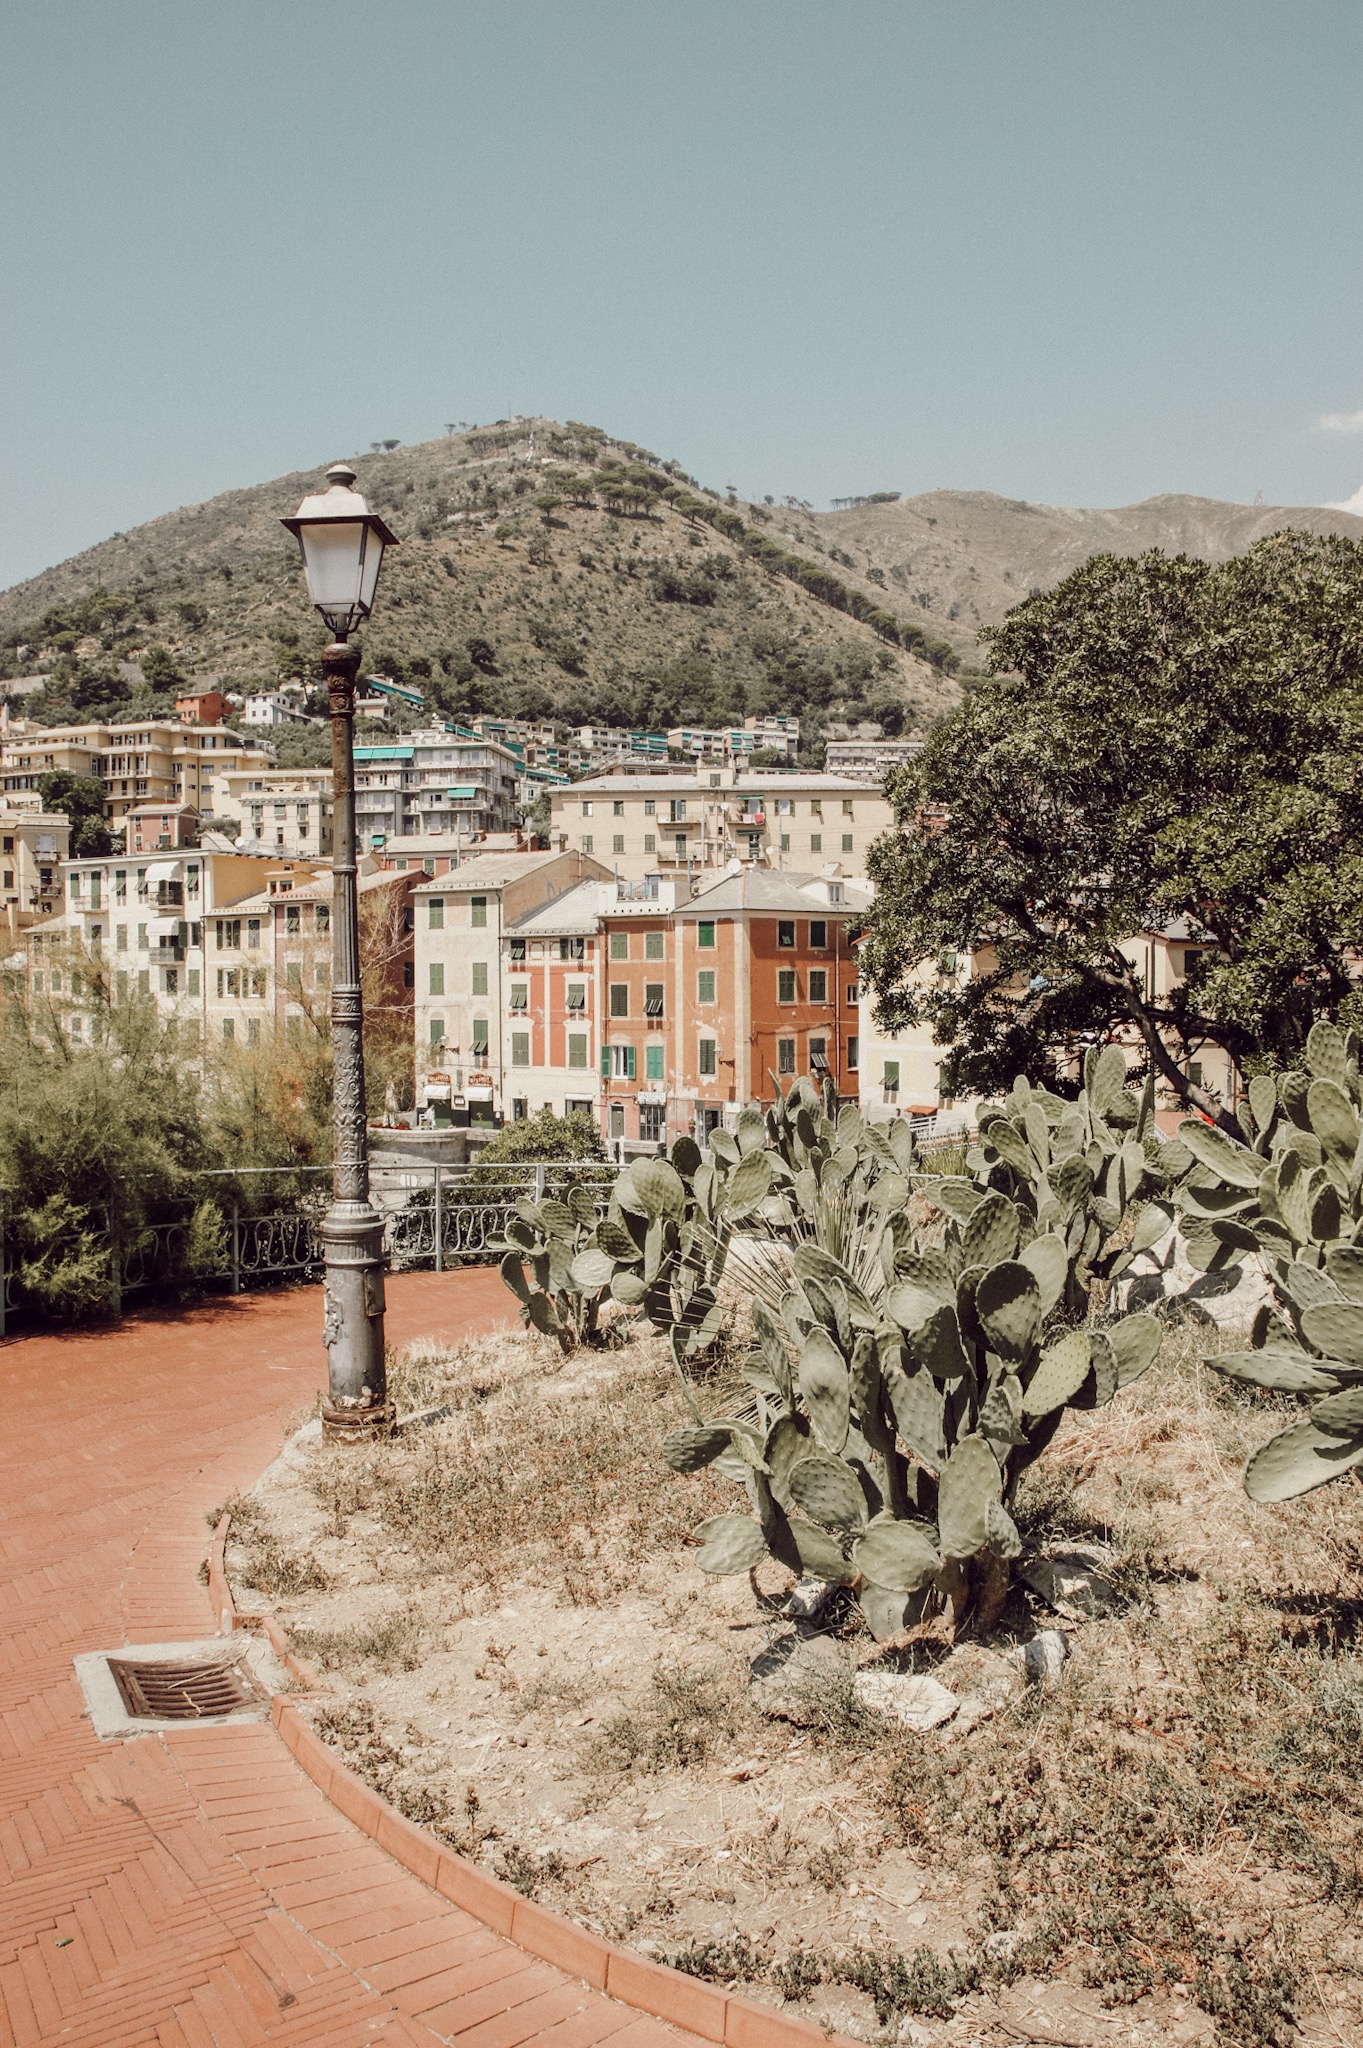 Nervi, Genua, Ligurien, Italien, italy, Travelblogger, daisies and glitter